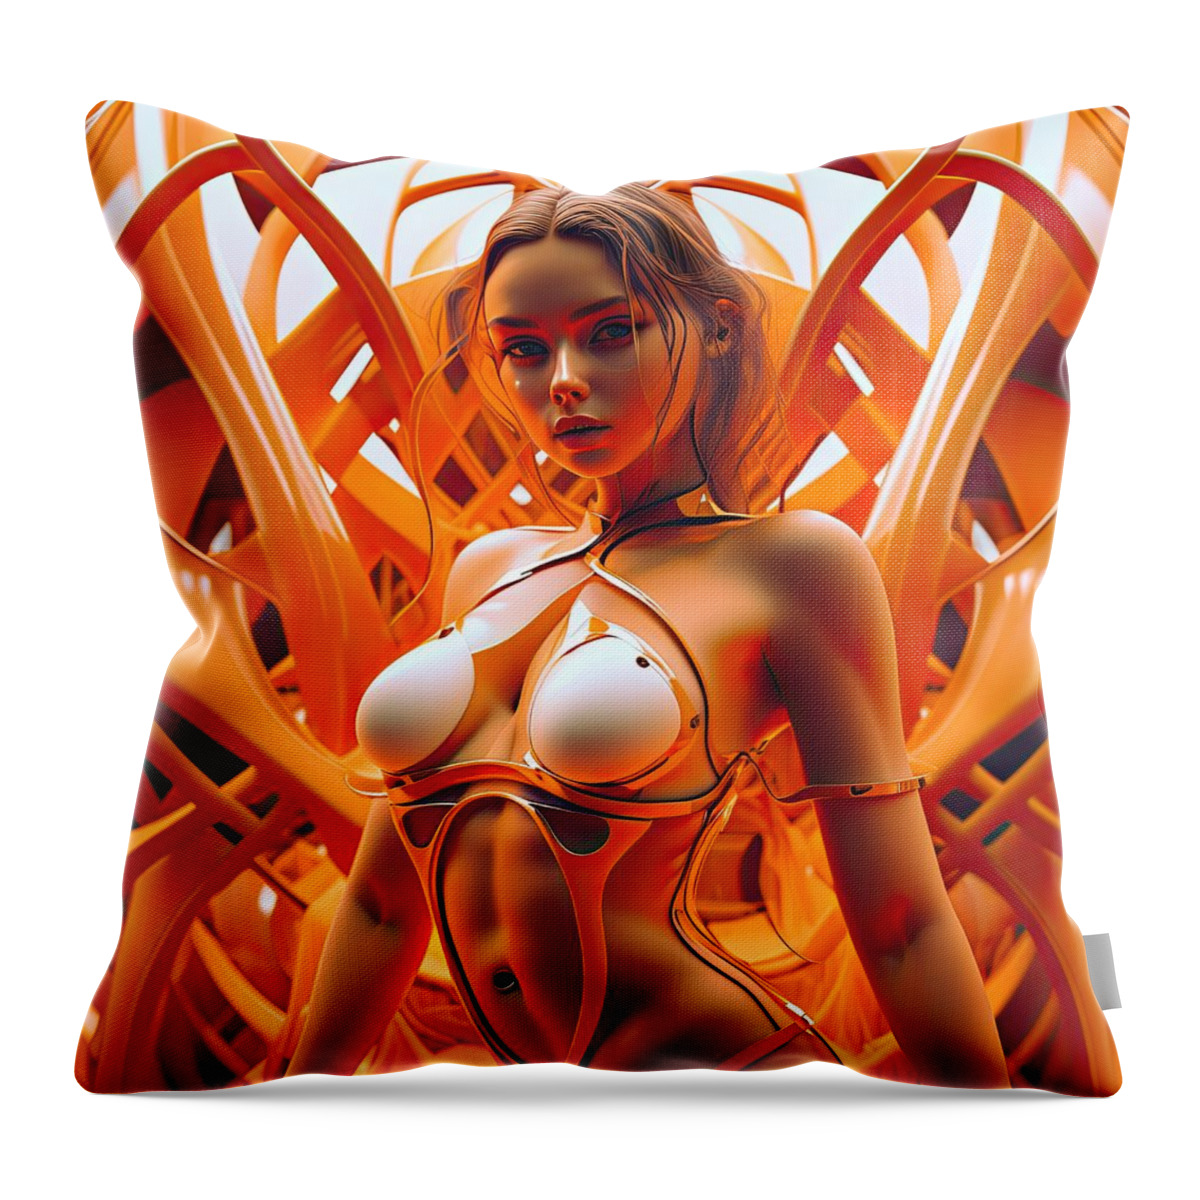 Pin Up Throw Pillow featuring the digital art Orange Seduction by My Head Cinema